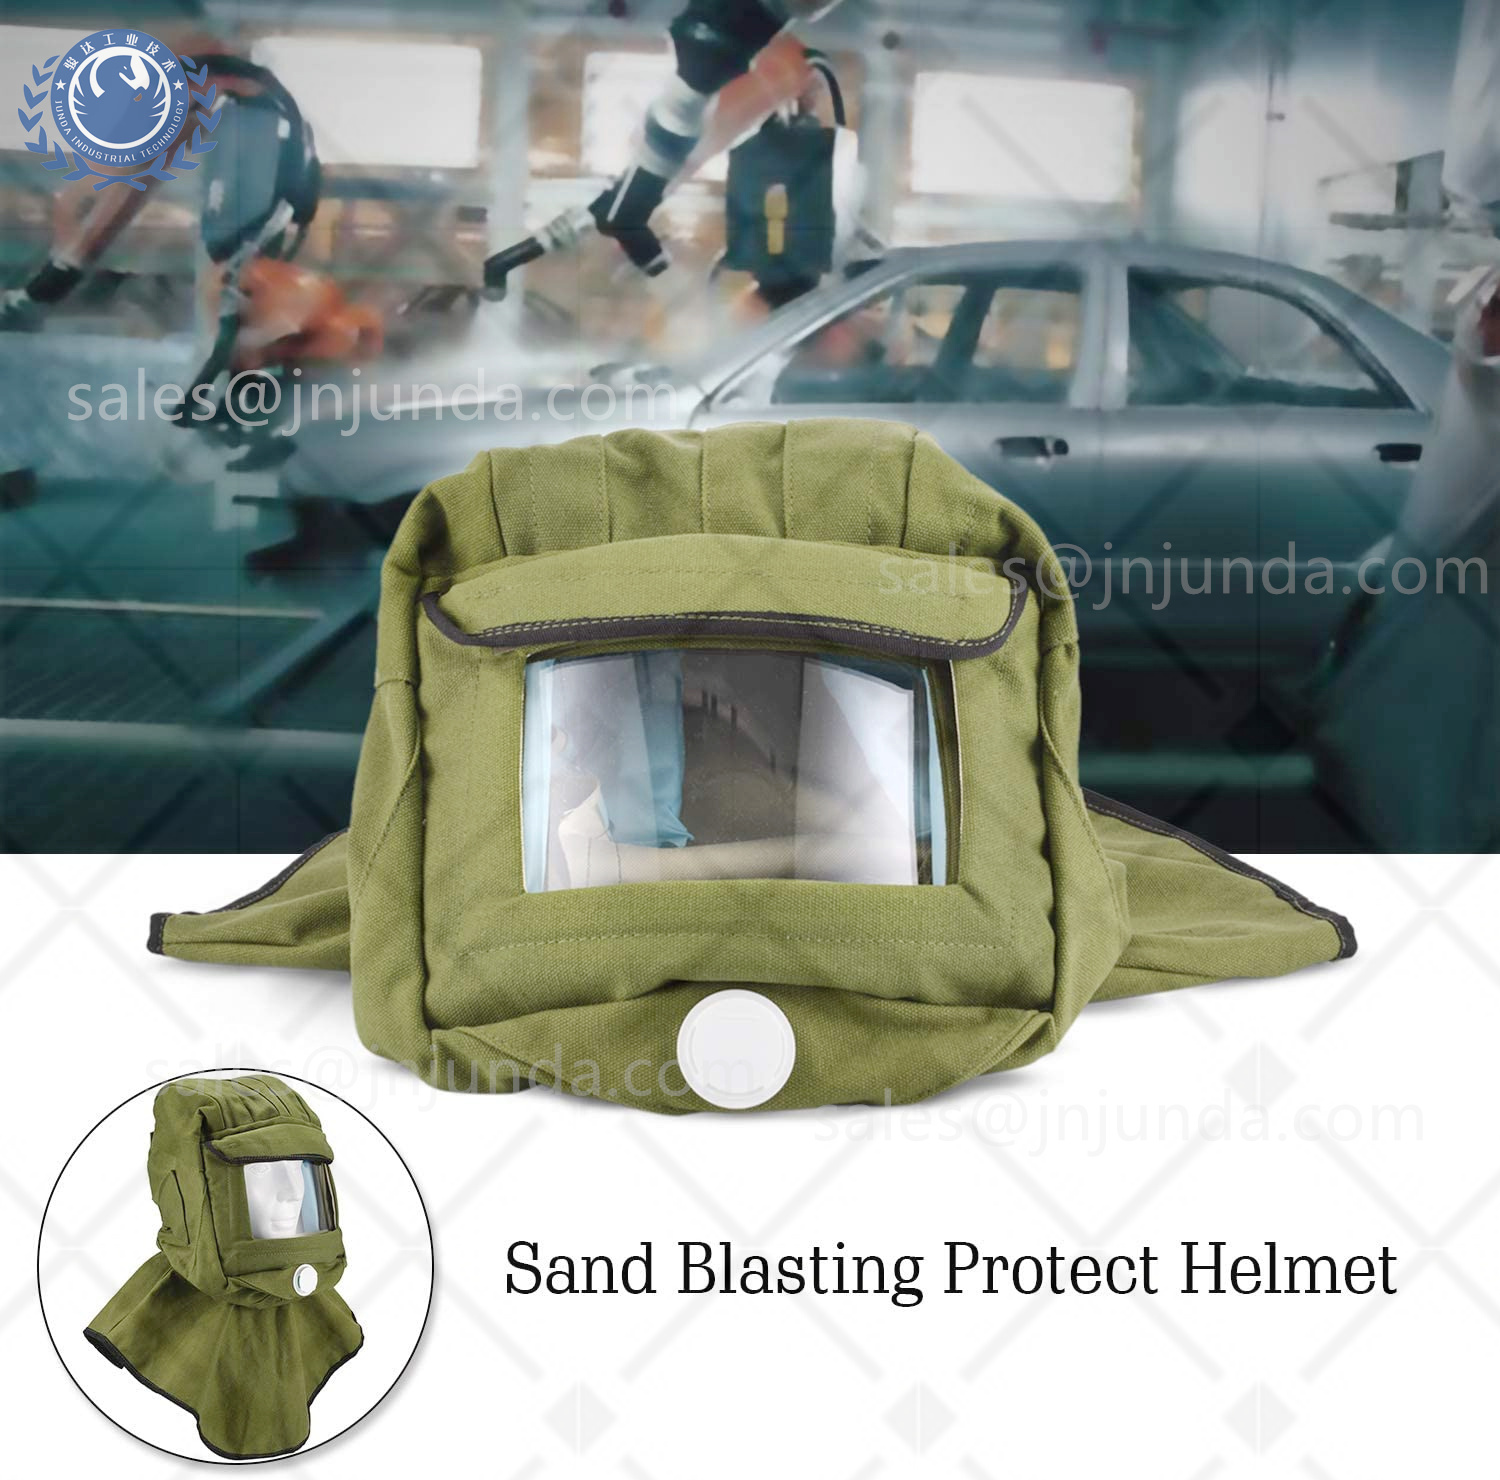 Junda H-2 sandblasting protection helmet